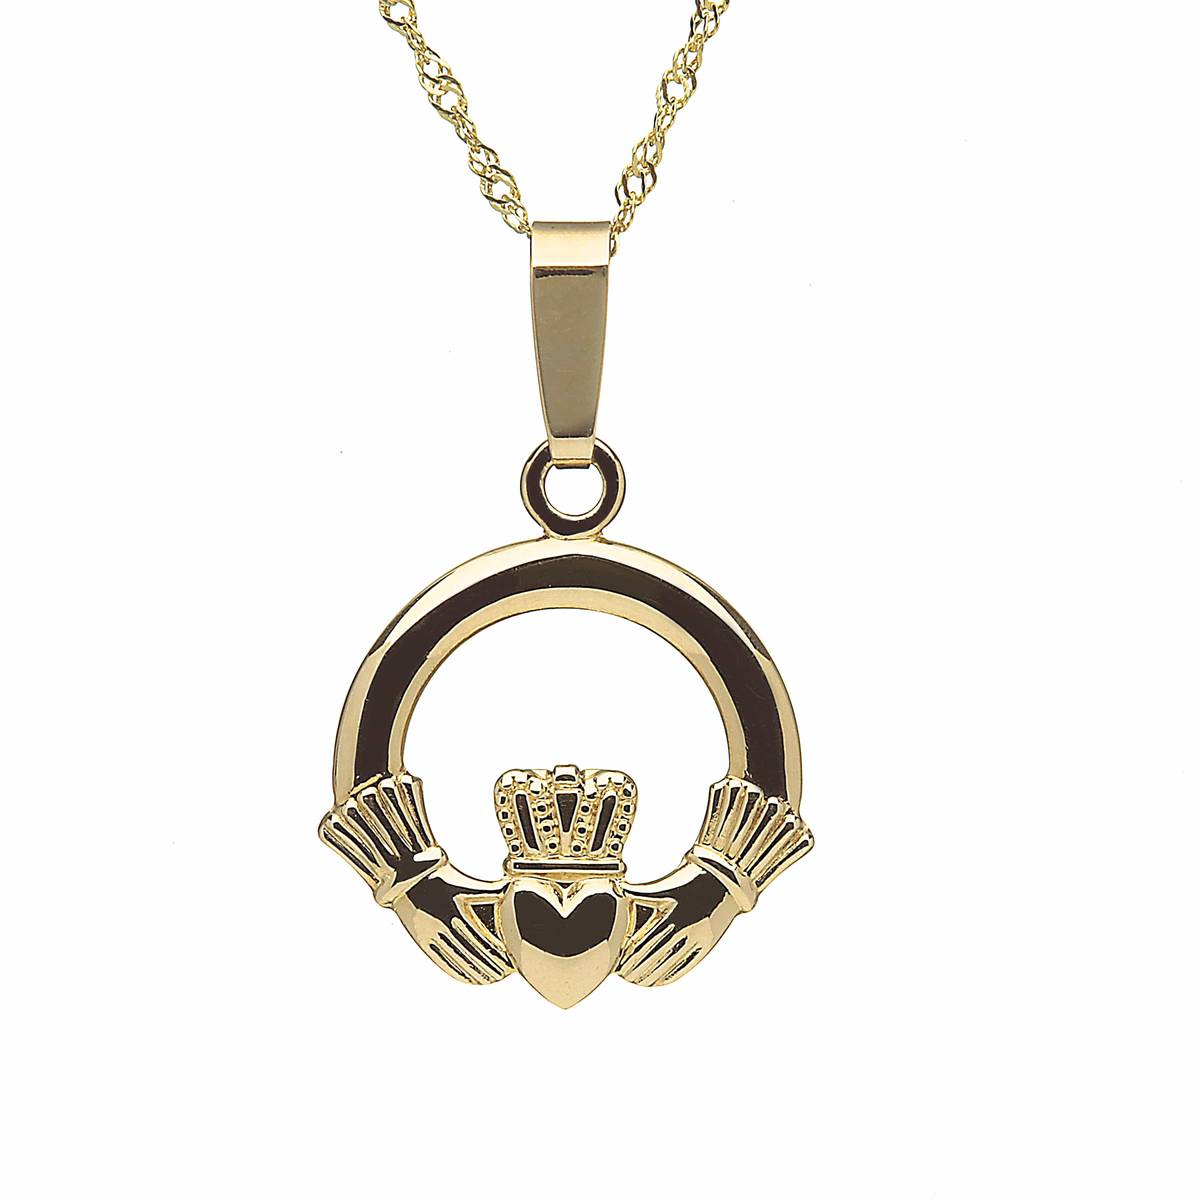 10 carat gold medium Claddagh pendant